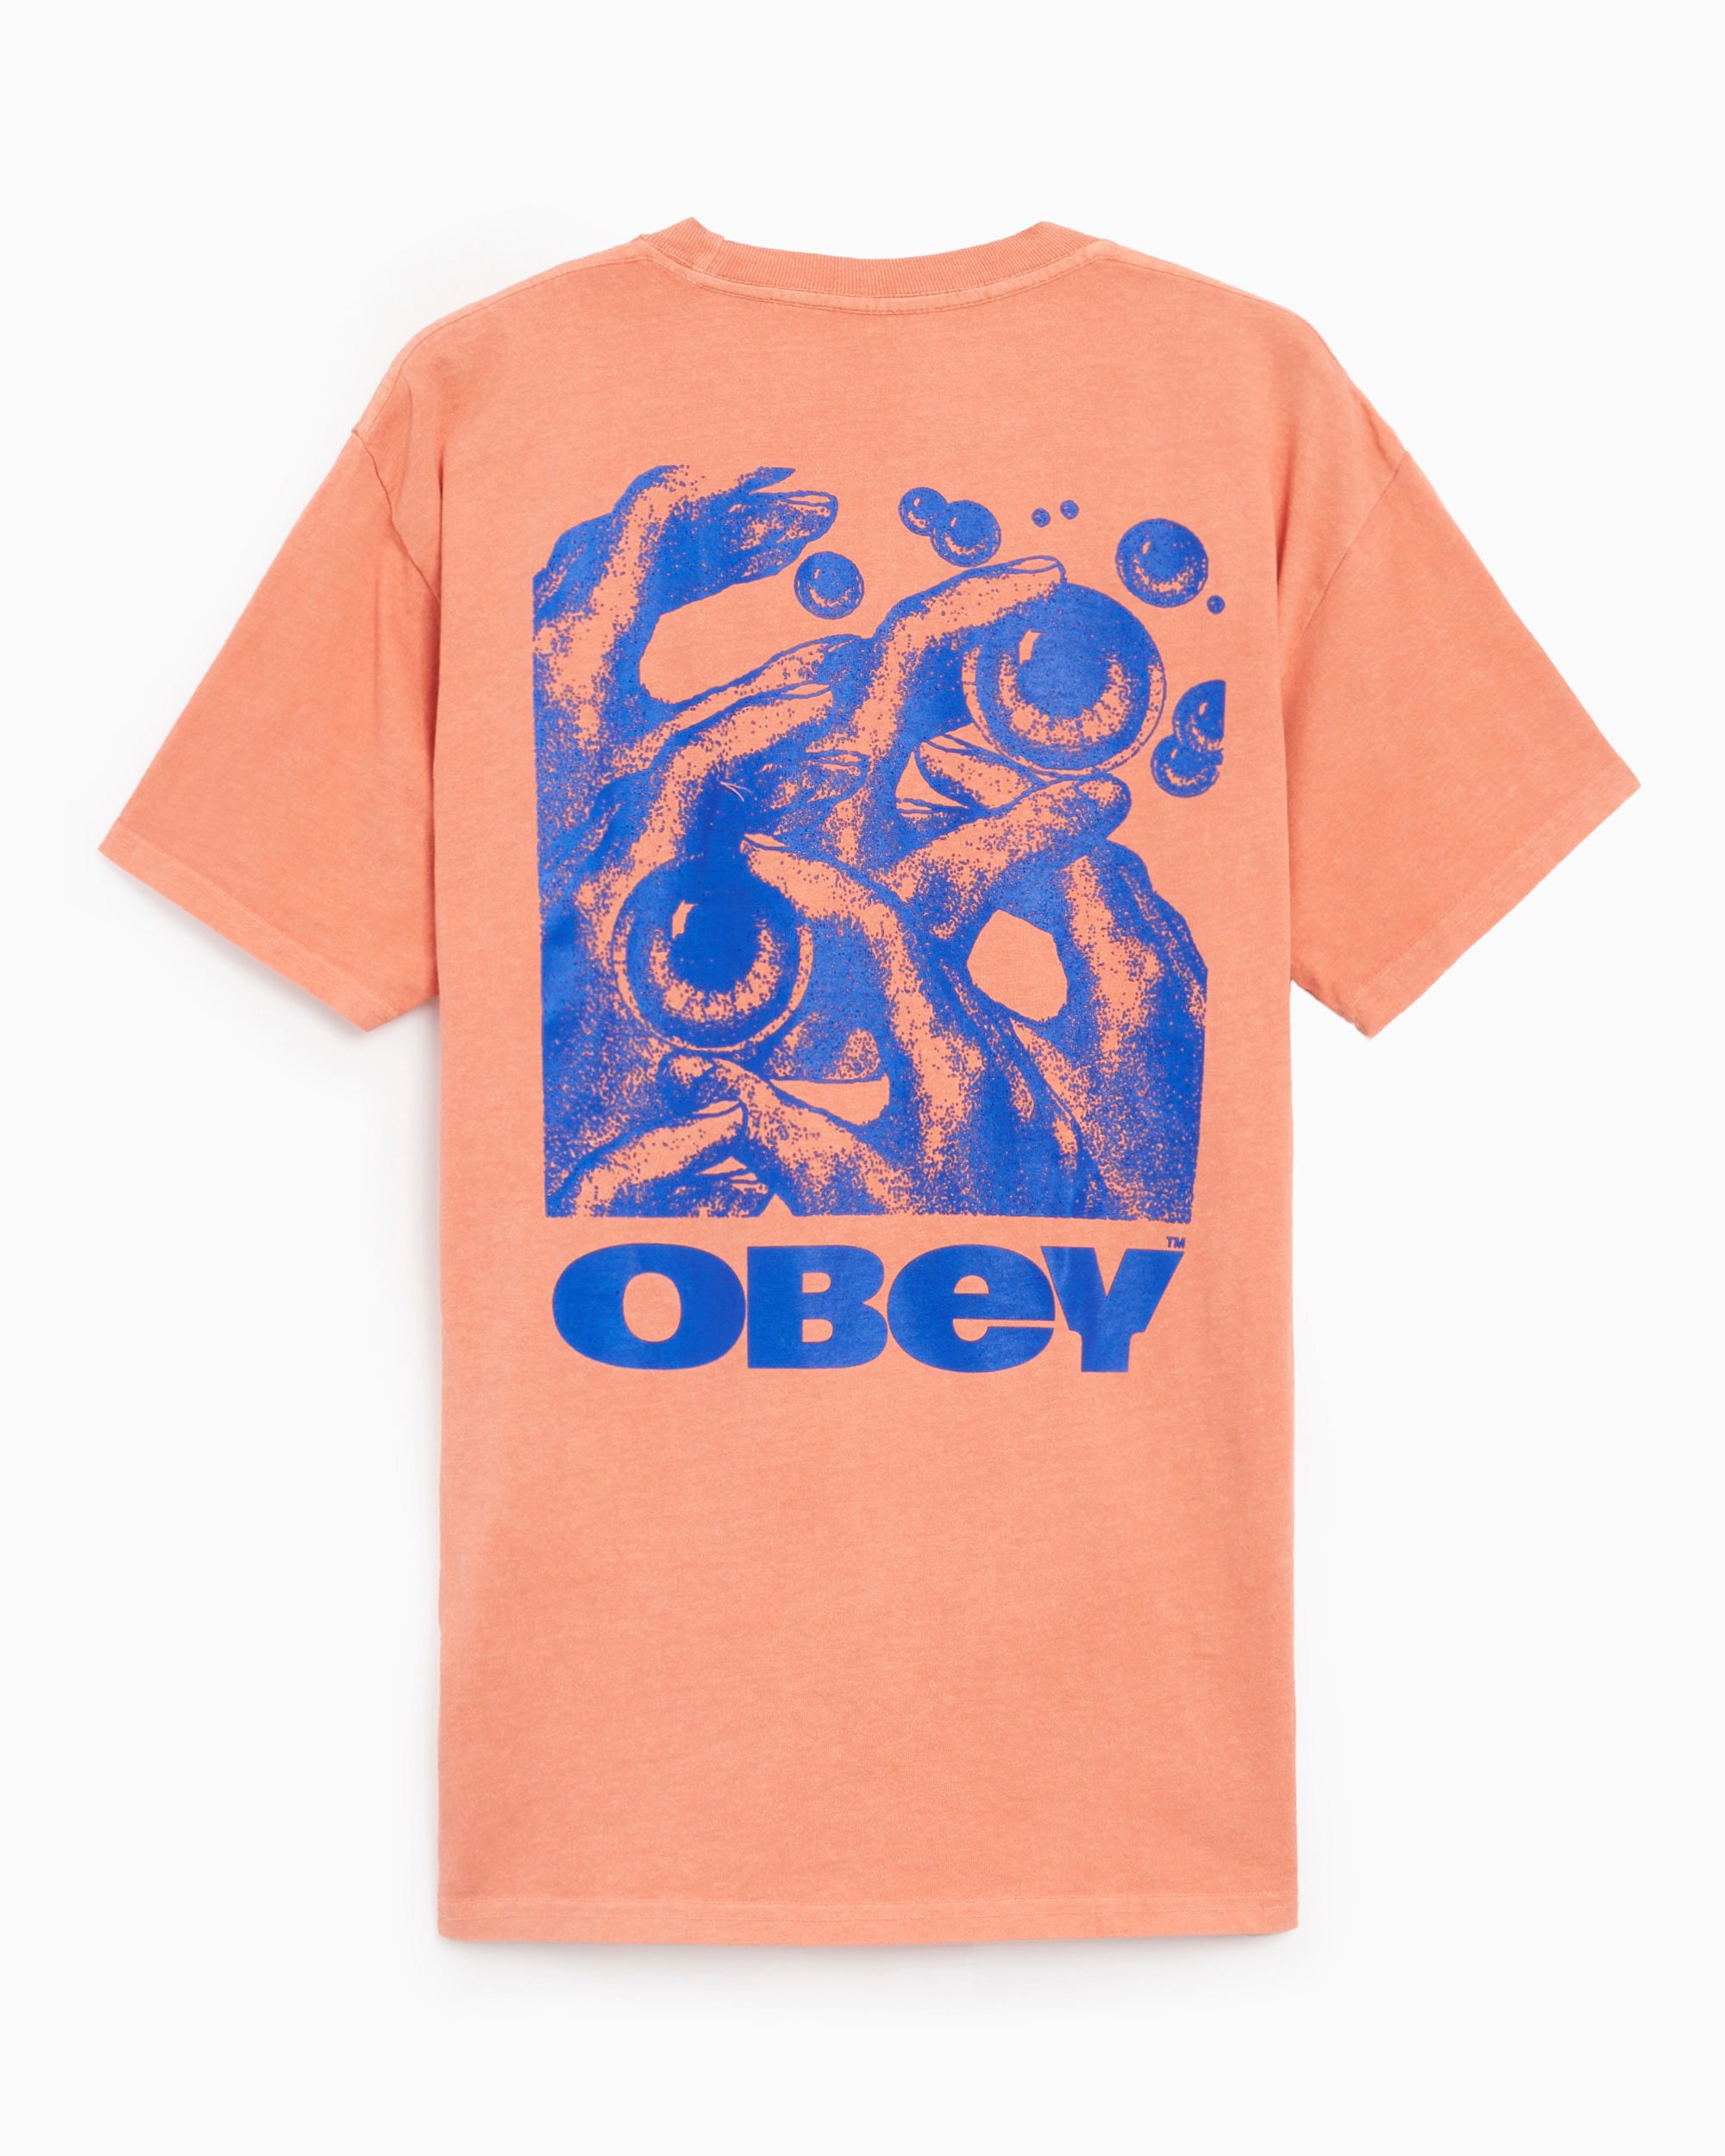 OBEY Clothing Obey Eyes In My Head Men's T-Shirt Orange 163813747 